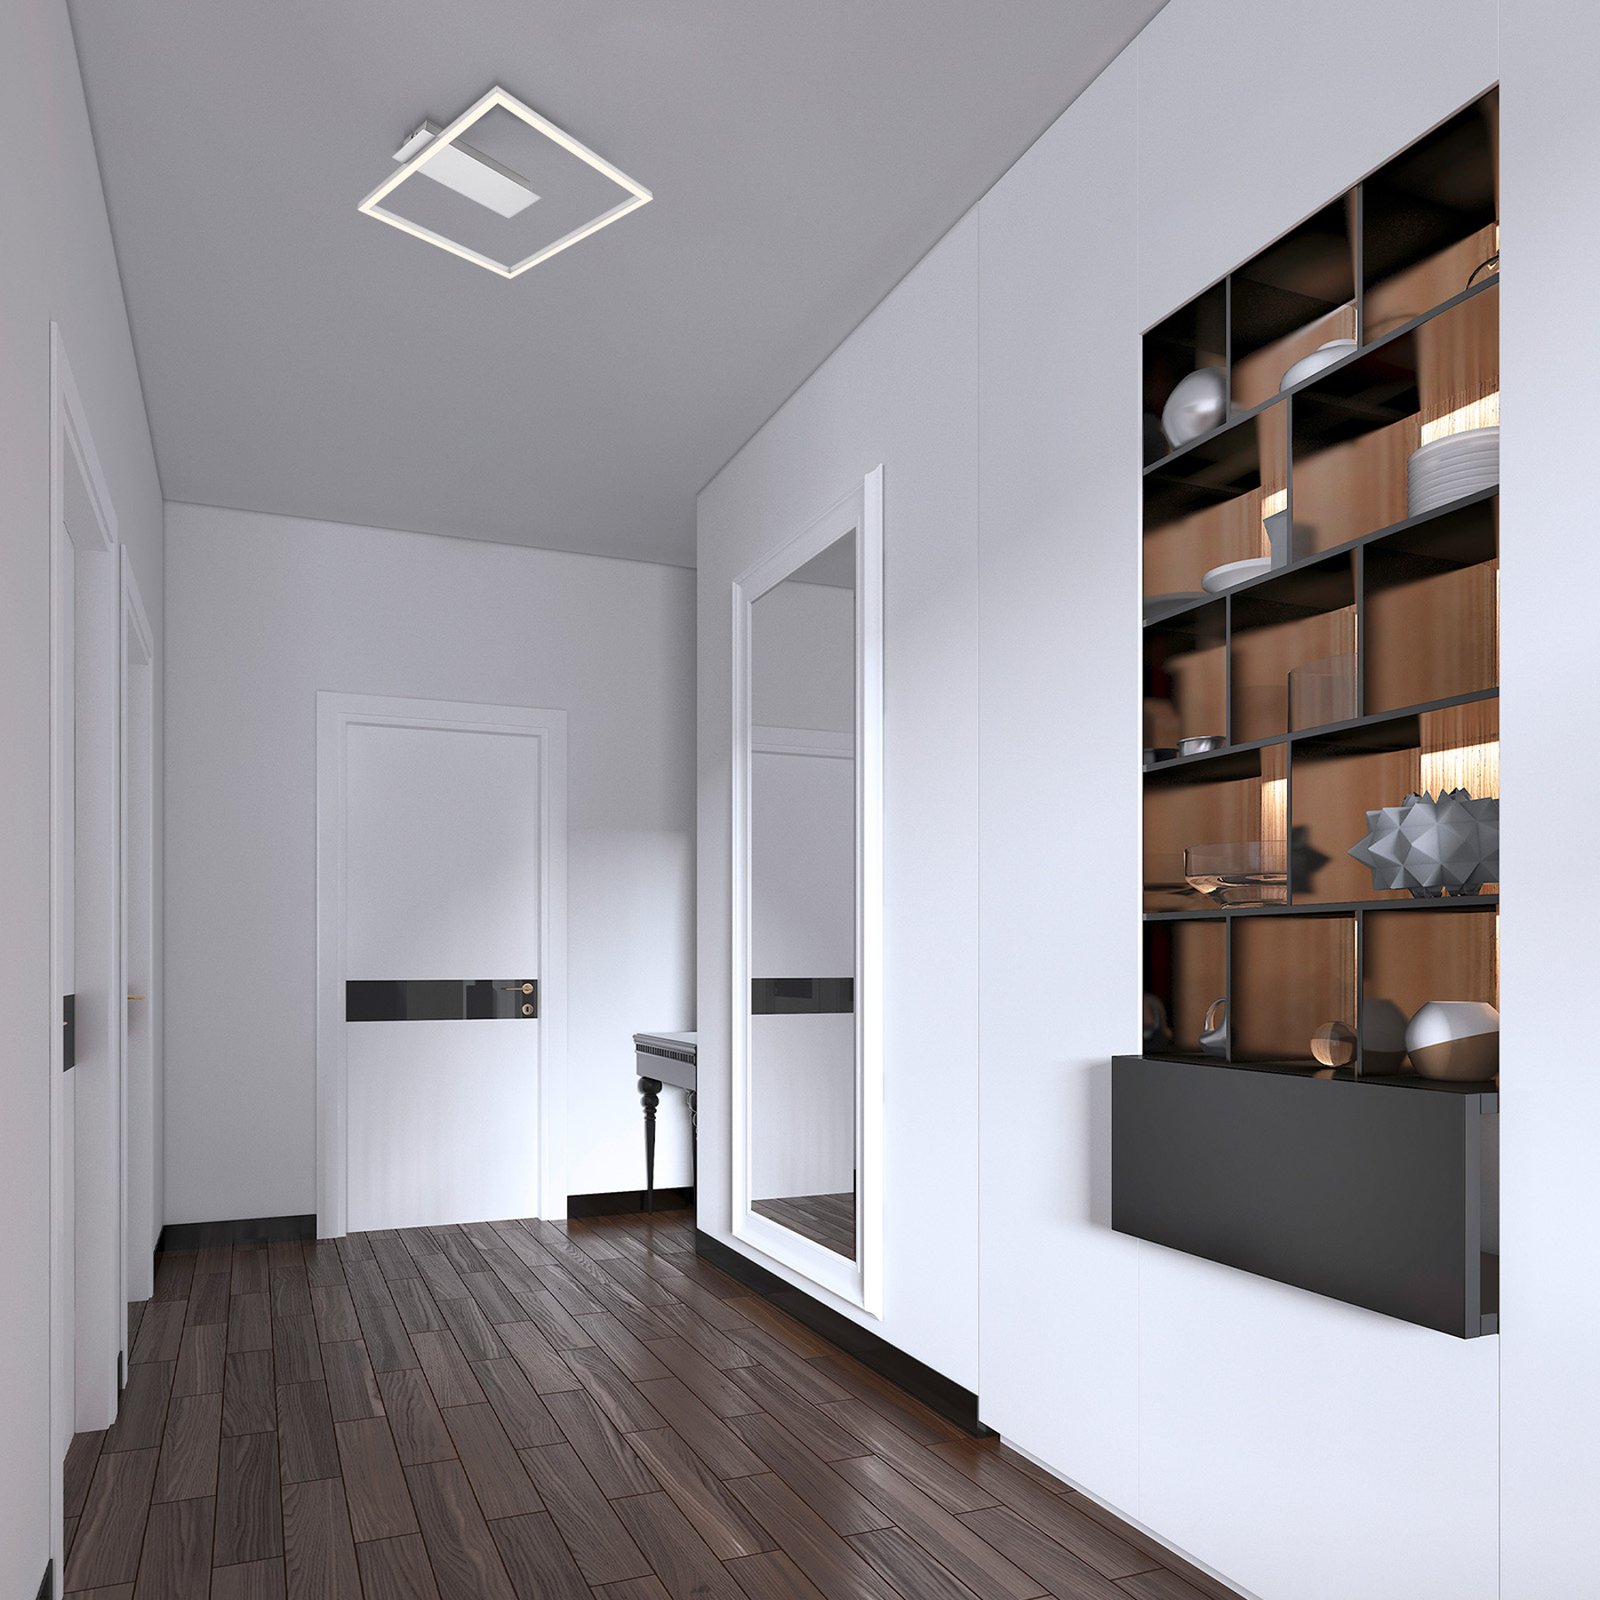 3771 LED ceiling light in a frame shape aluminium